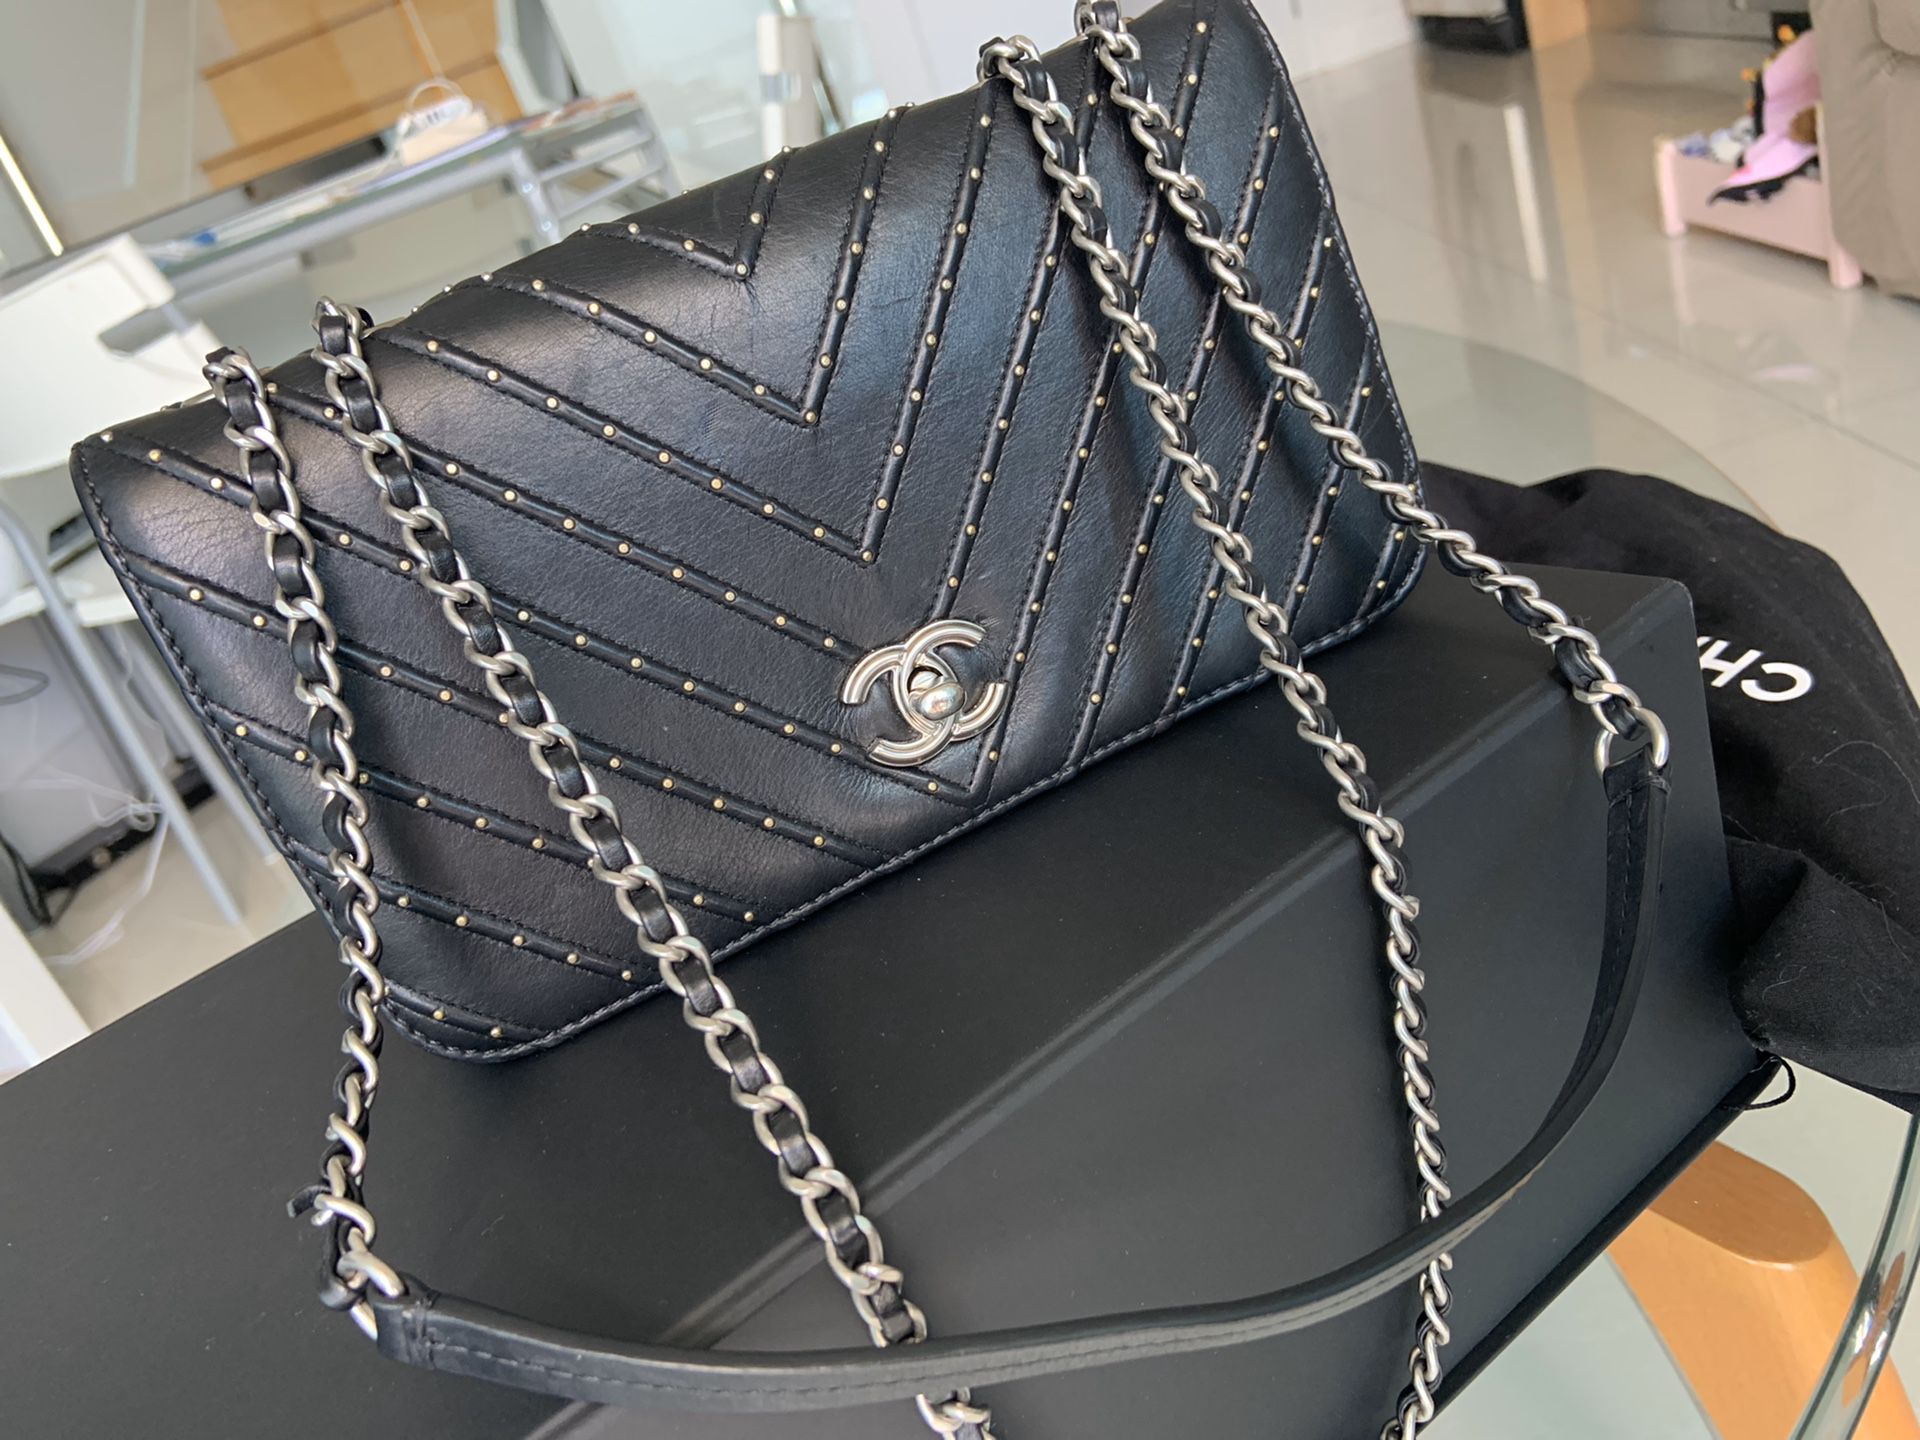 Chanel original black handbag